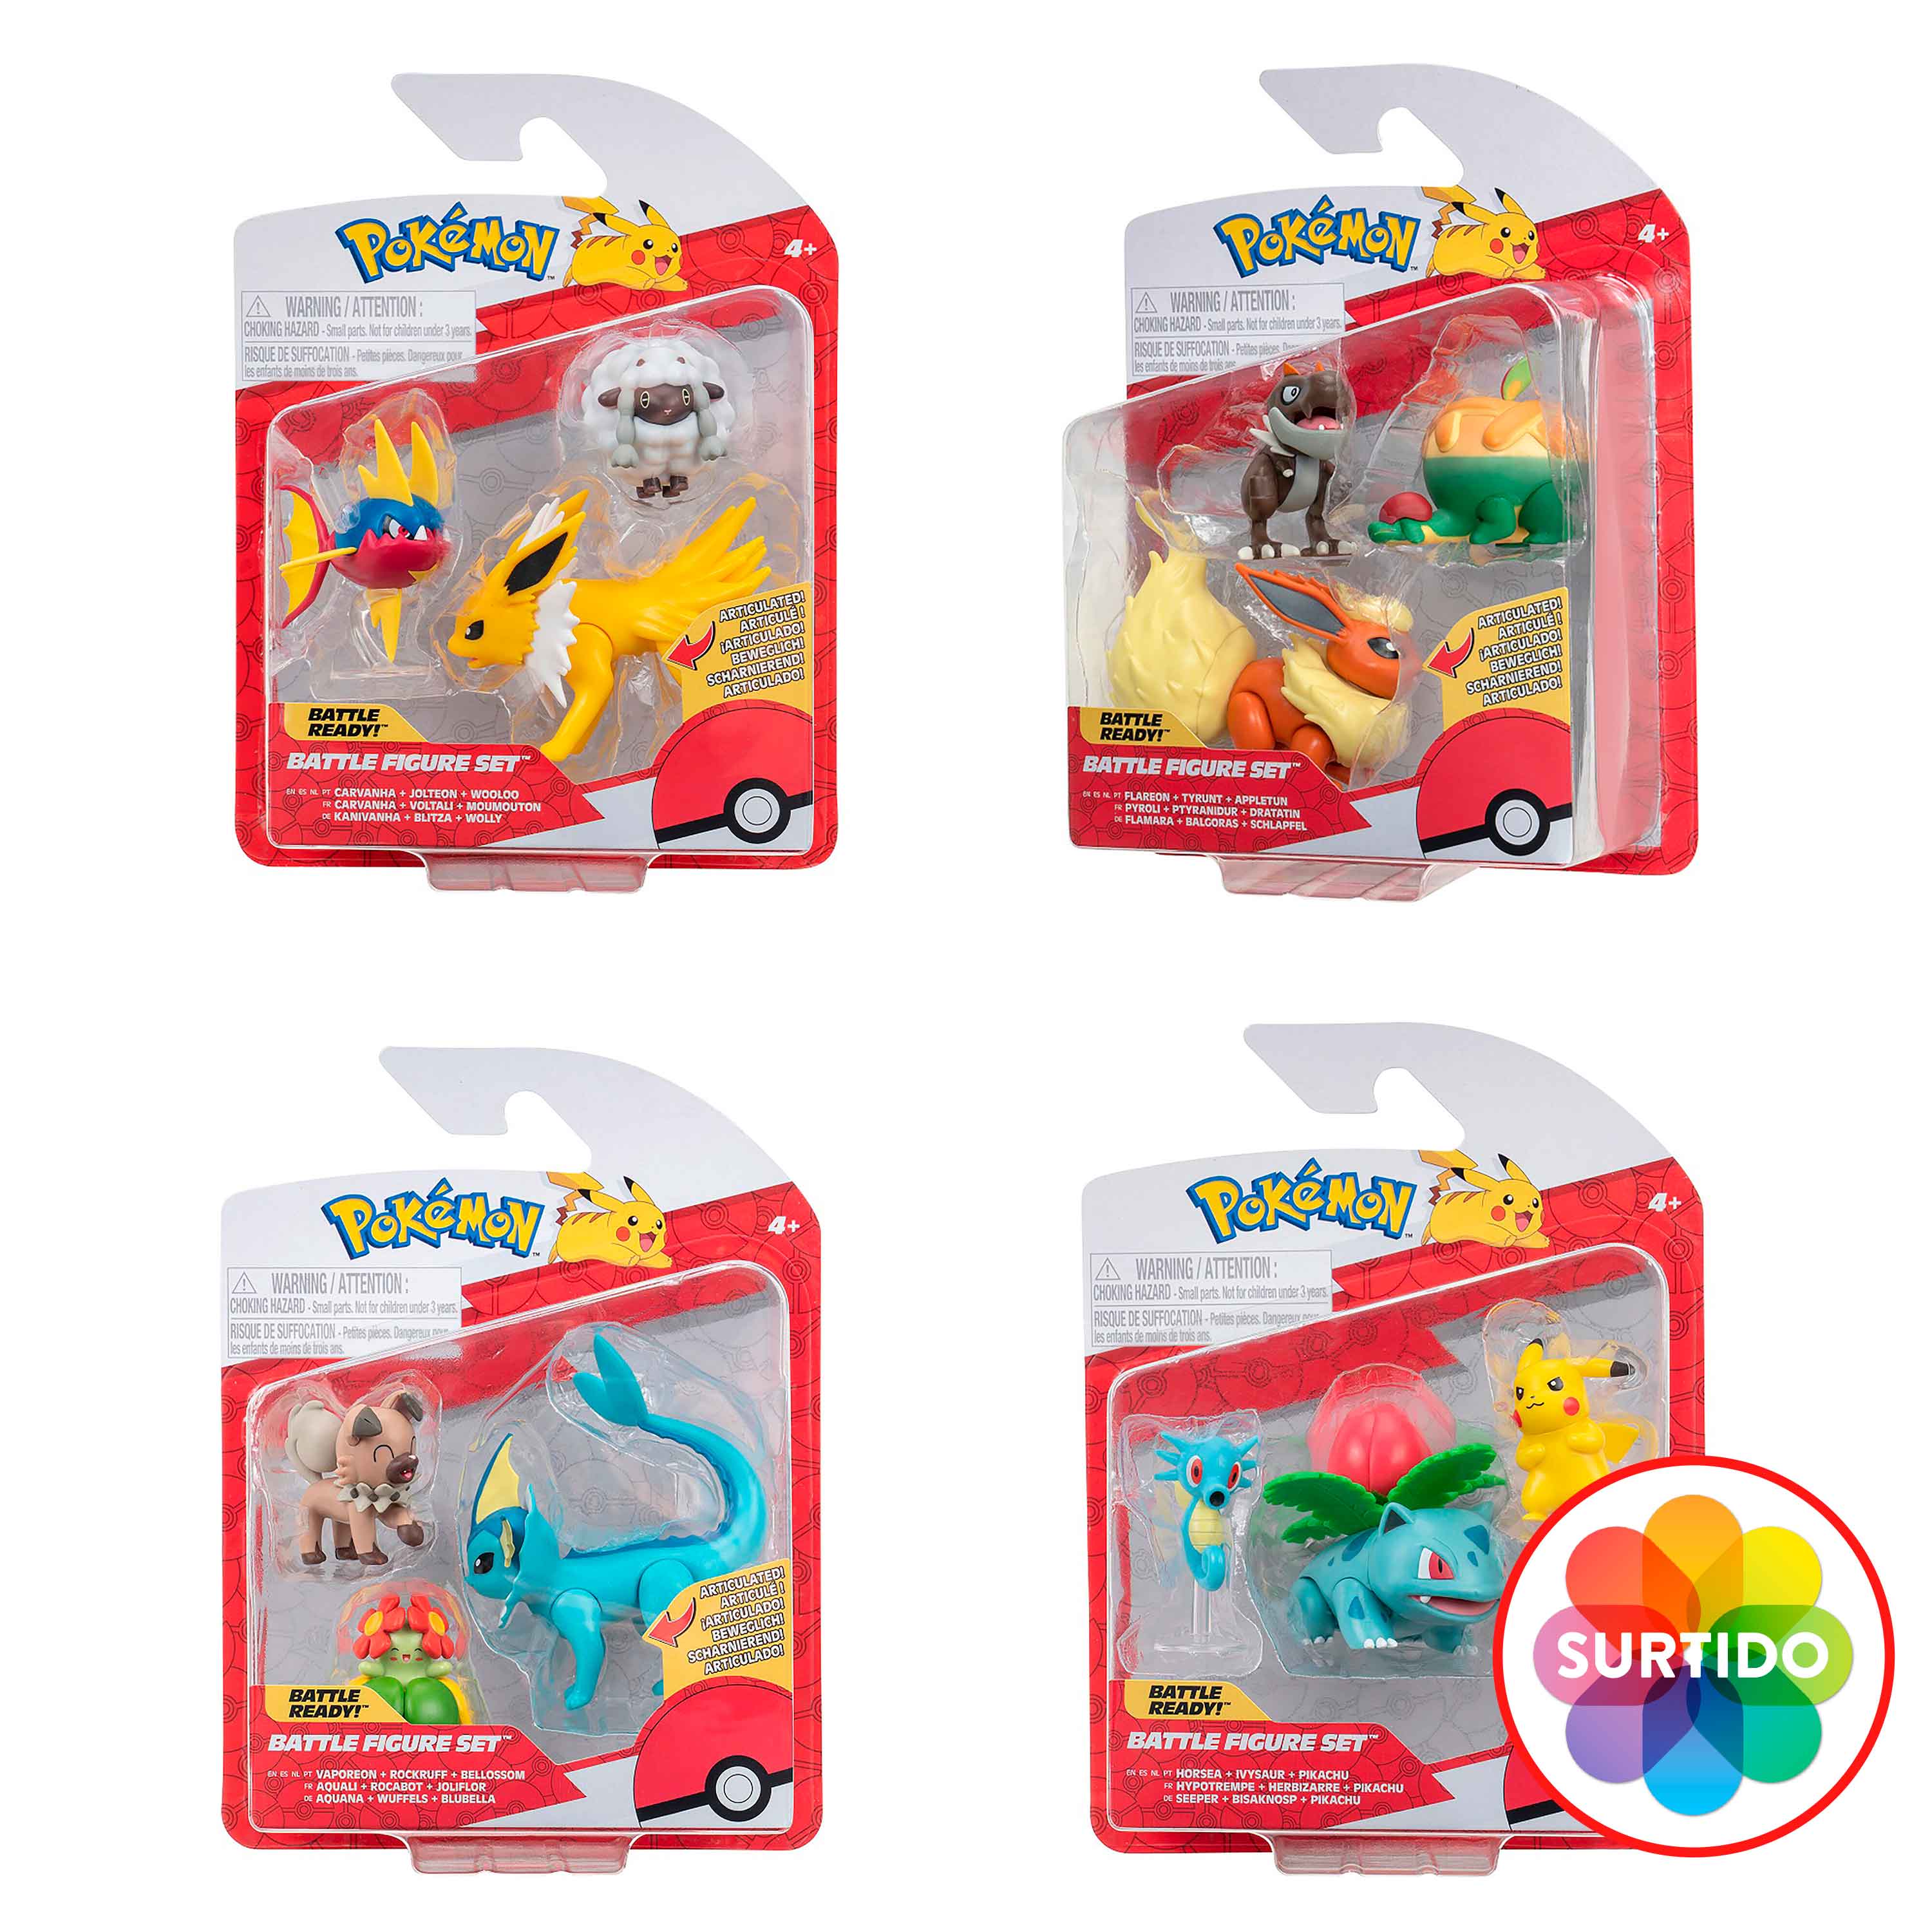  Pokémon Set de juguetes de figuras de batalla con